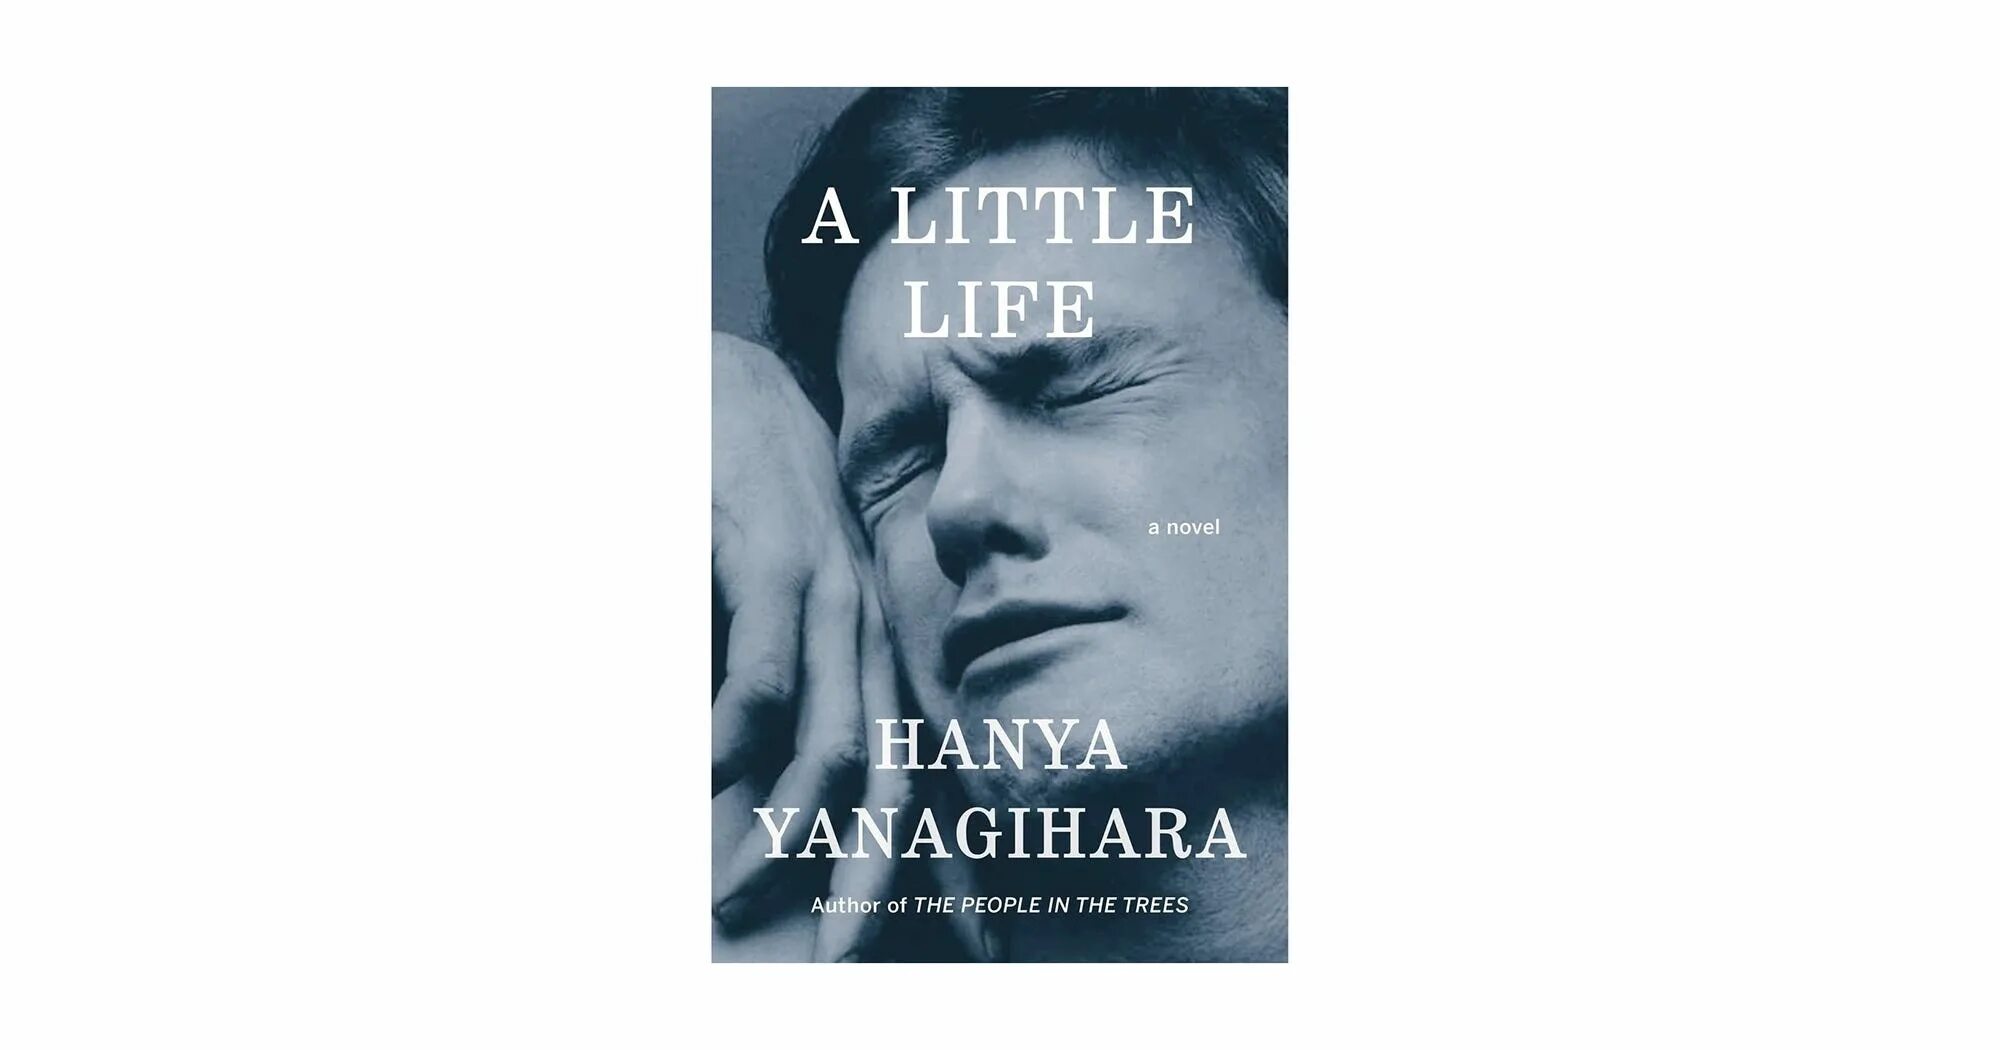 She little life. A little Life книга. A little Life hanya Yanagihara. The little Life hanya Yanagihara обложка. Обложка книги a little Life.